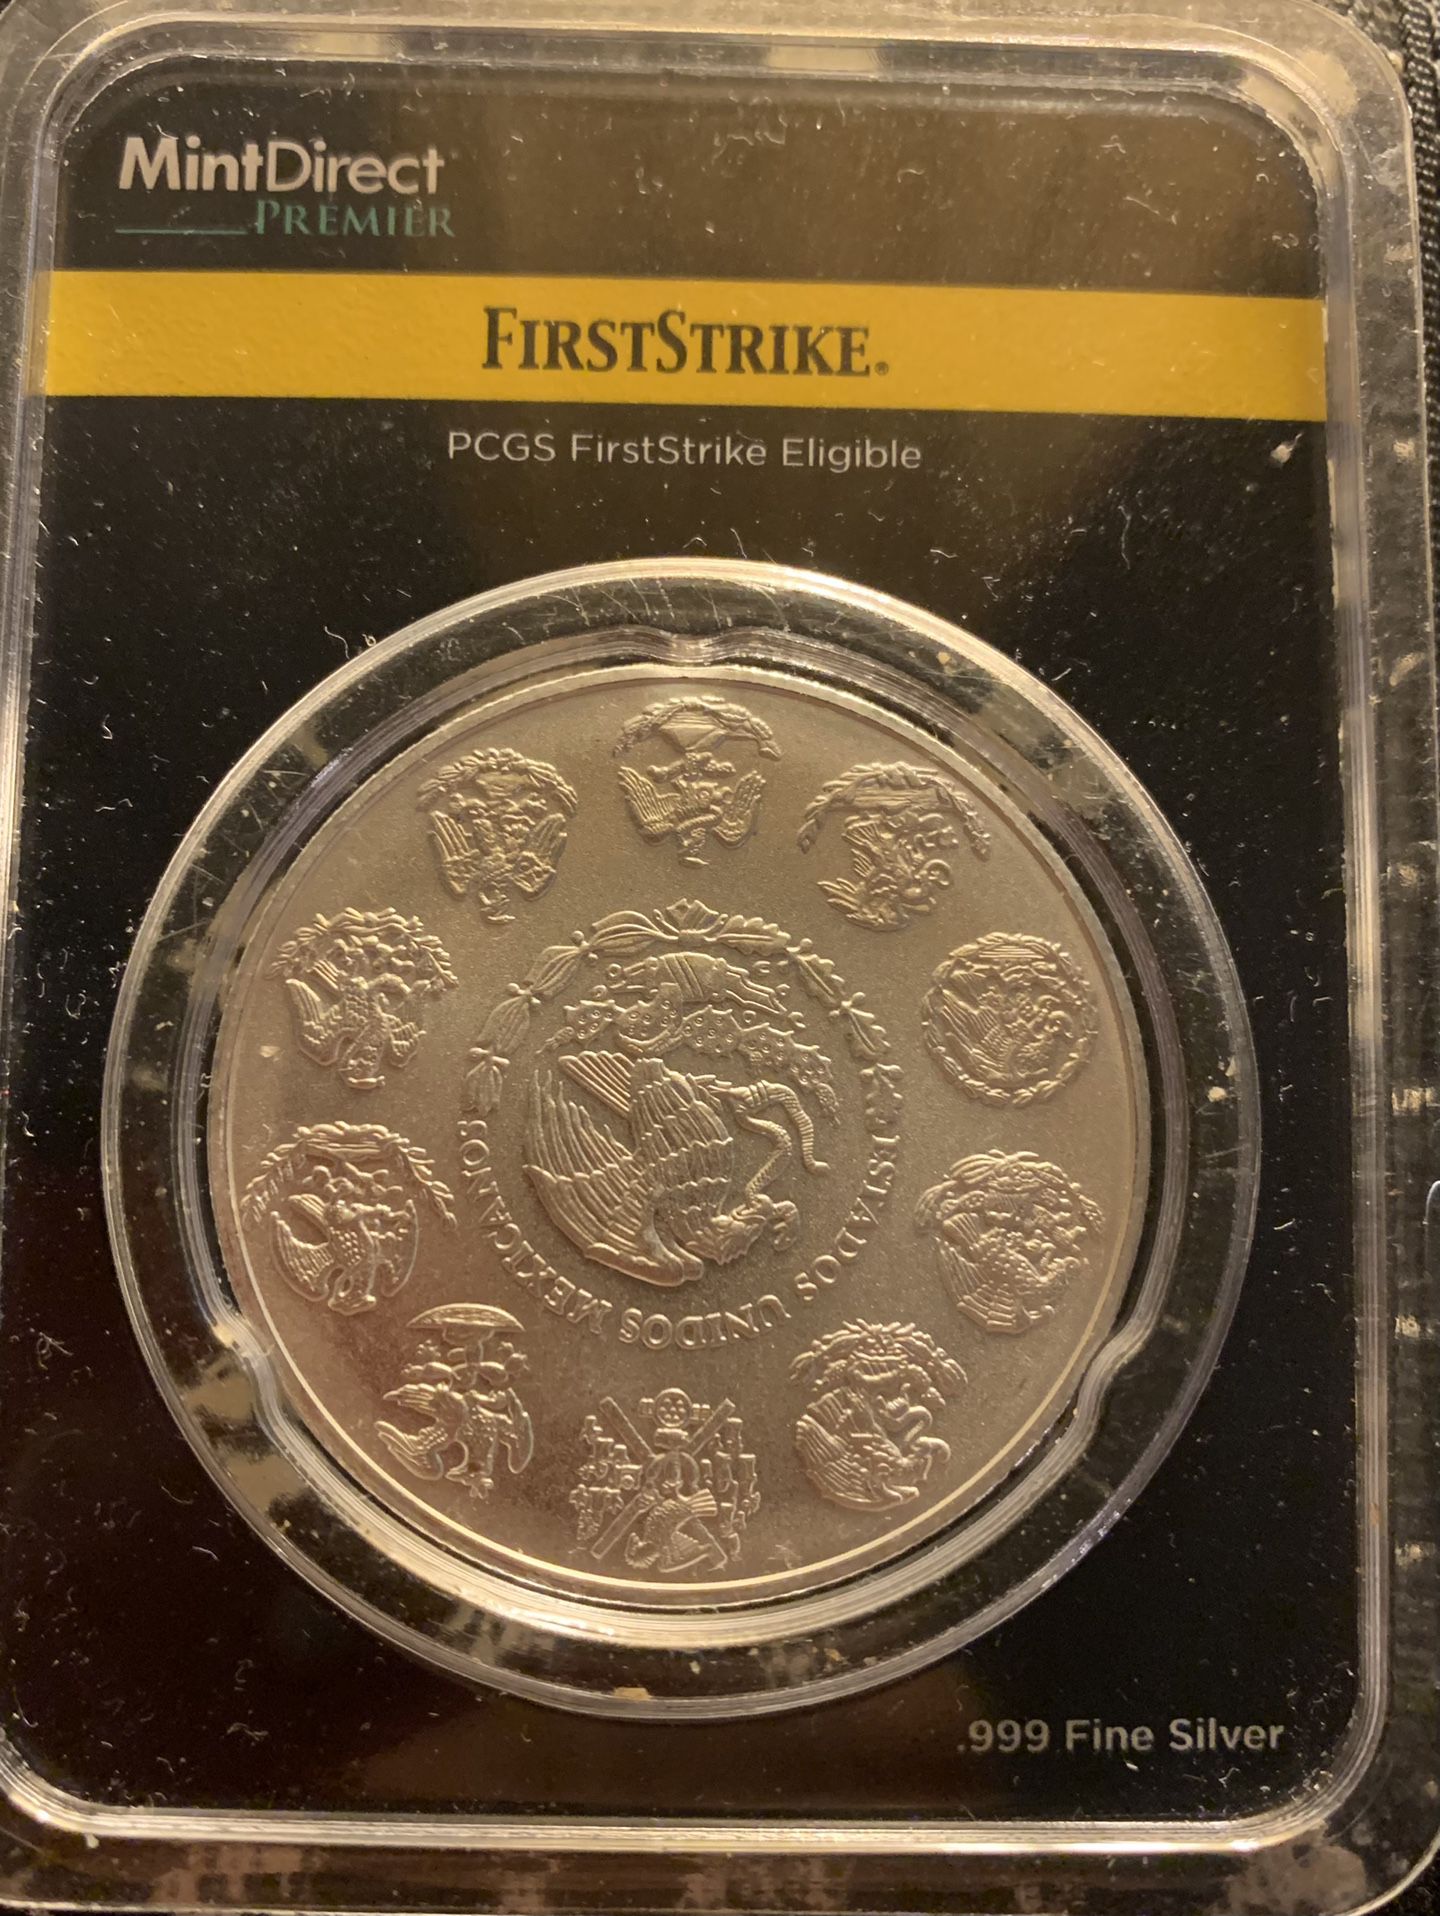 2022  1 OZ Silver Libertad  Mint Direct Premier Coin.